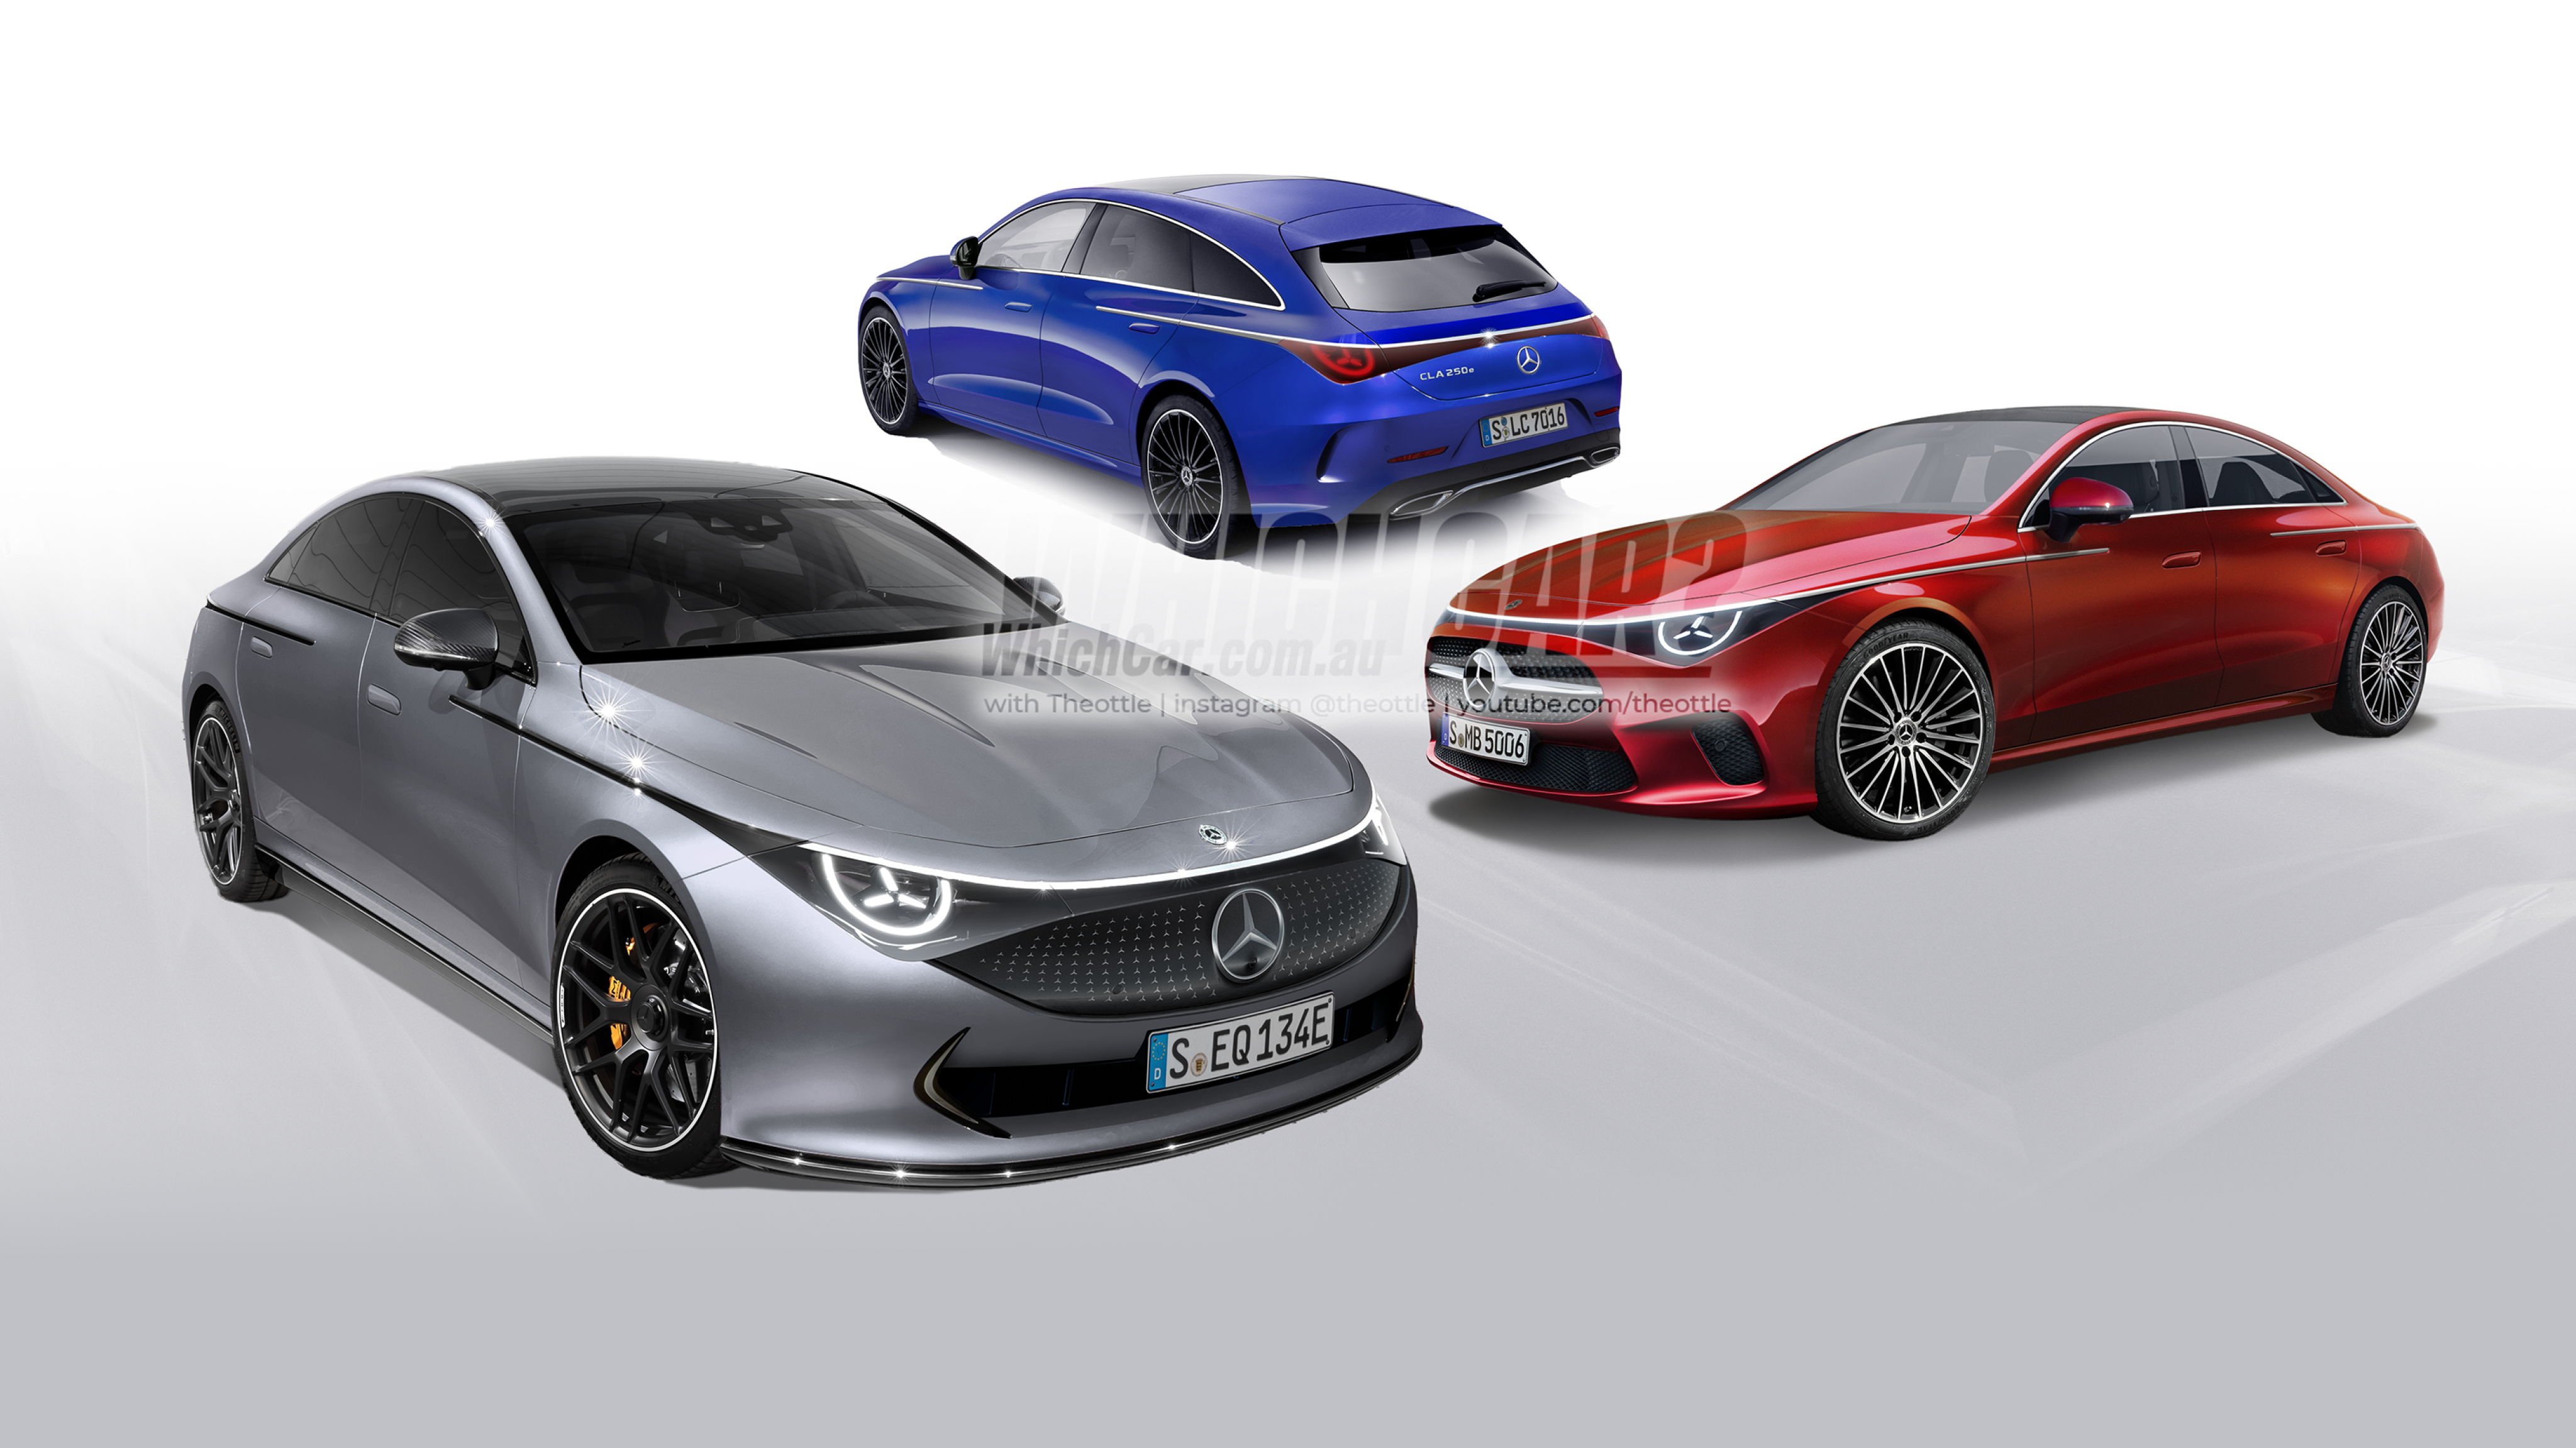 The new Mercedes-Benz Concept CLA Class